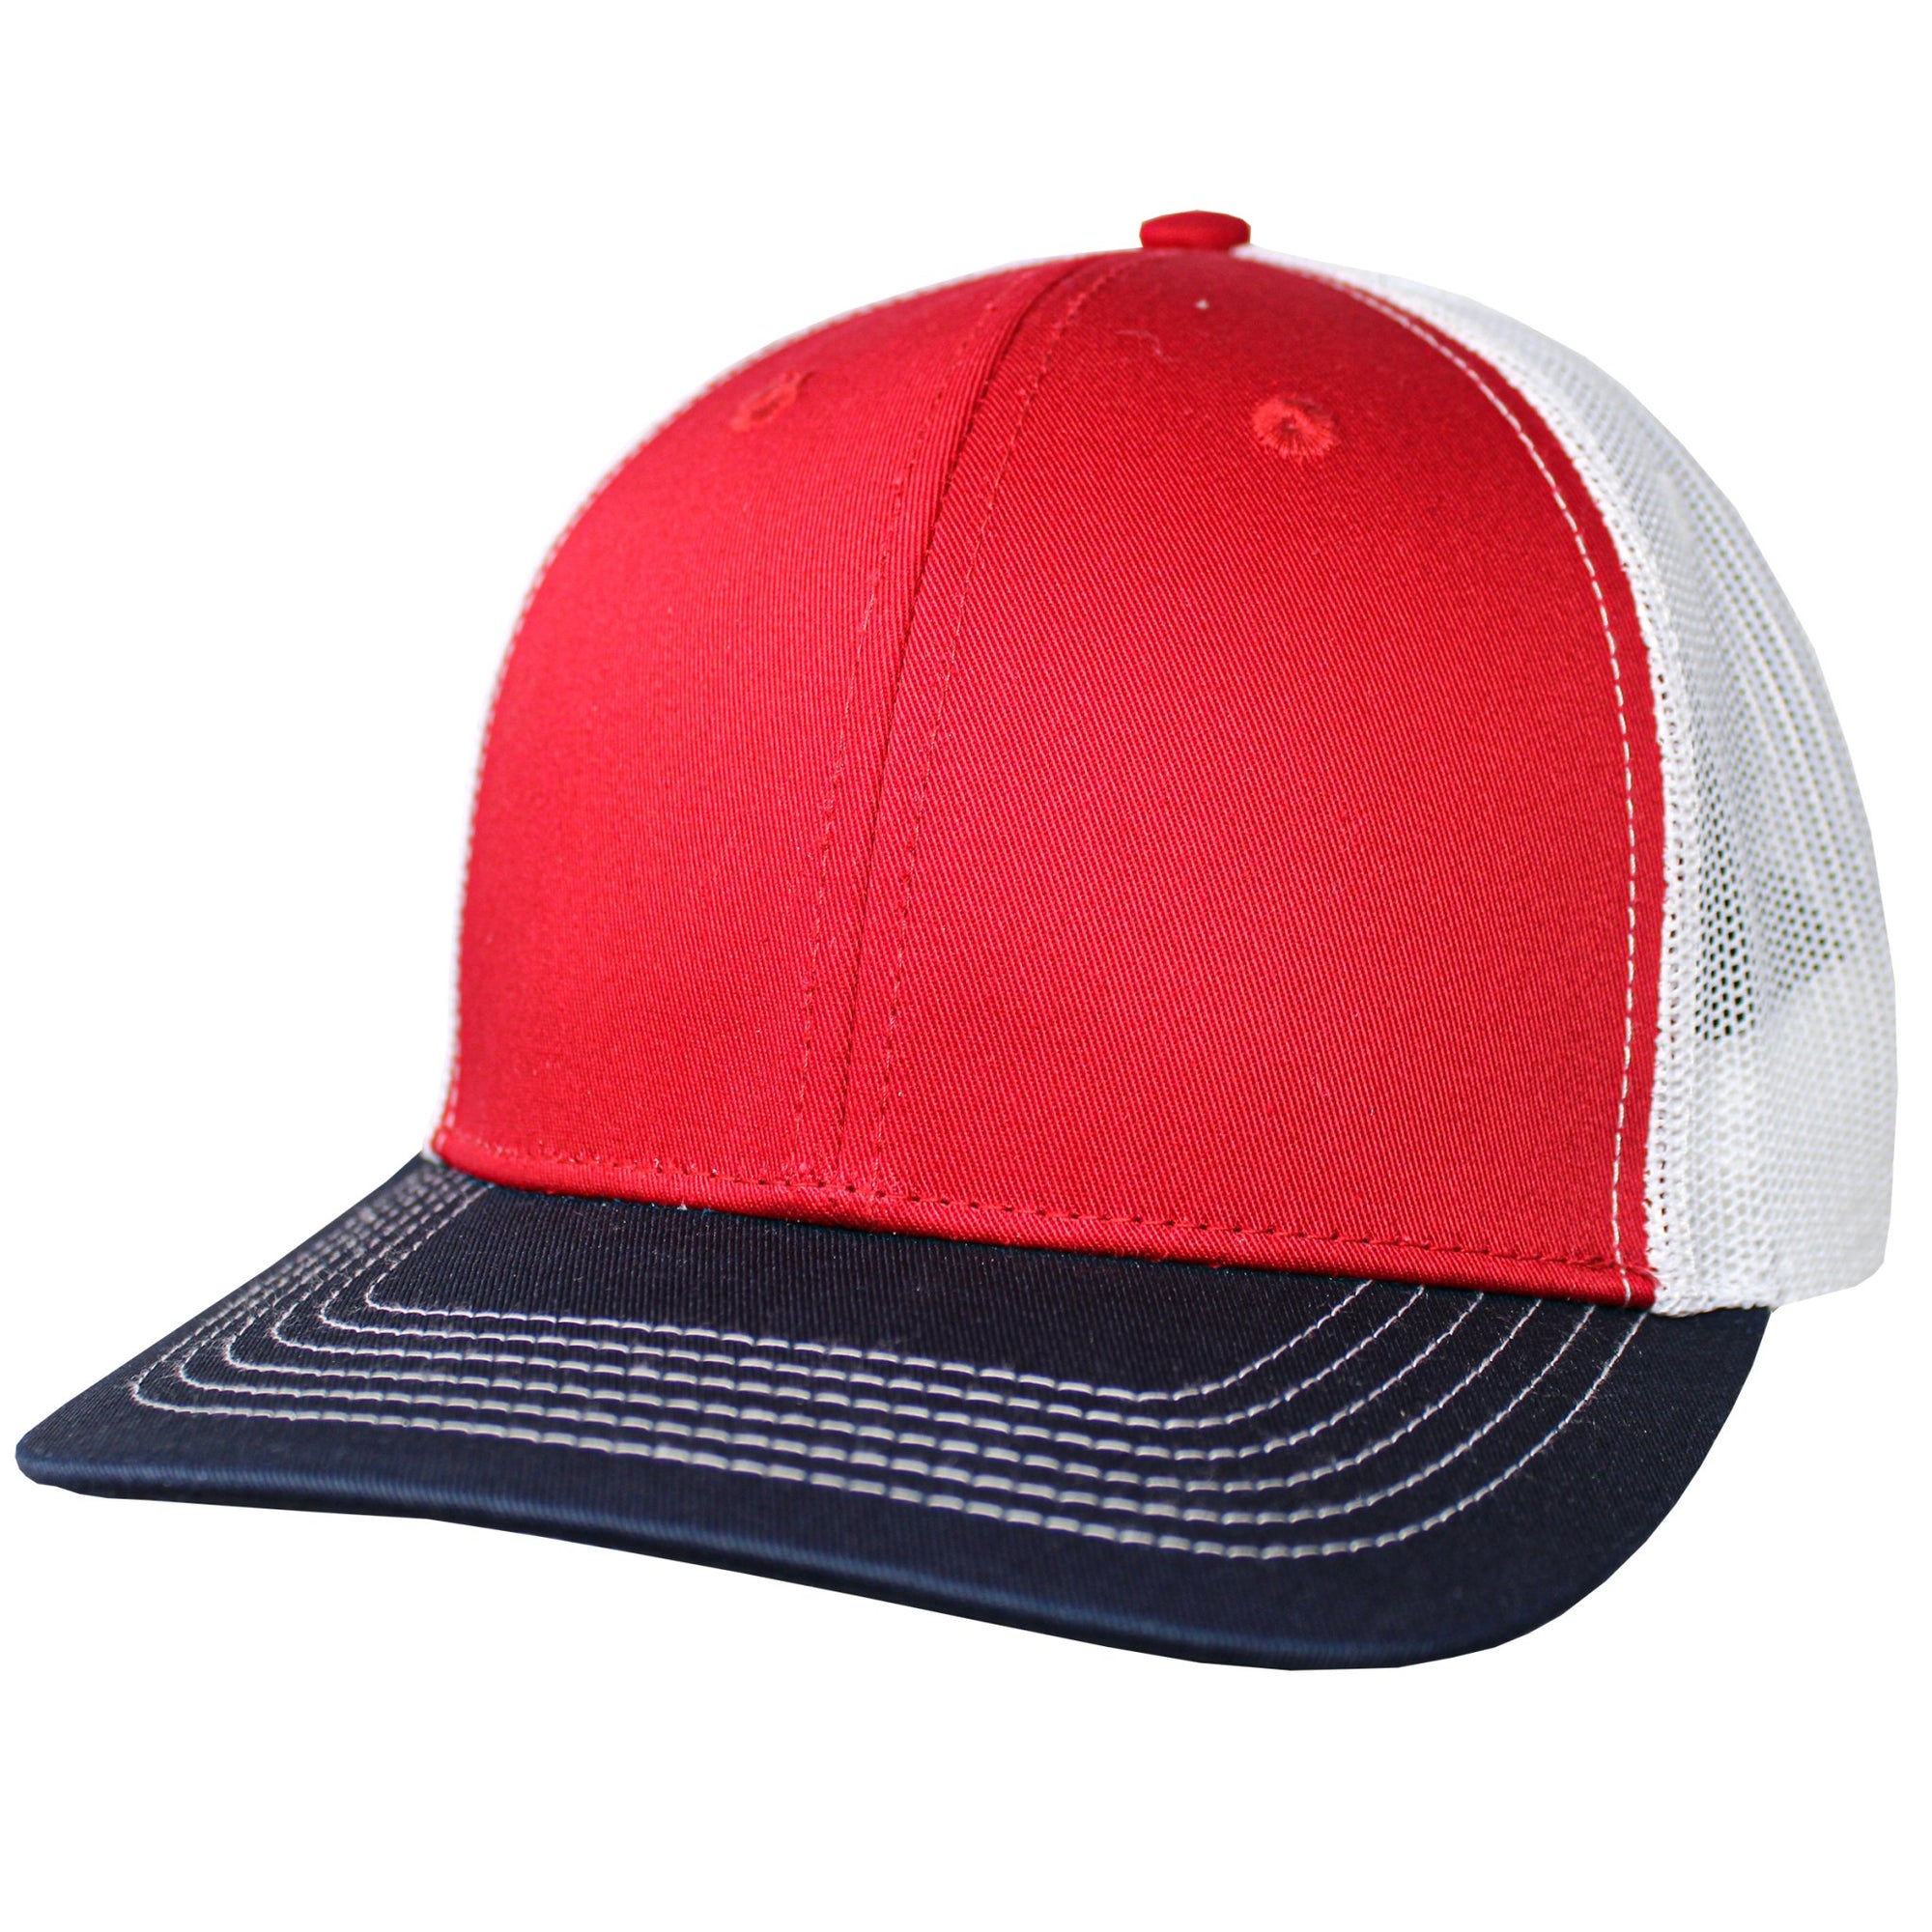 Blank Headwear - BC23 / 6 Panel Performance Trucker Cap - Red / White / Navy - Black Cat MFG - Hat